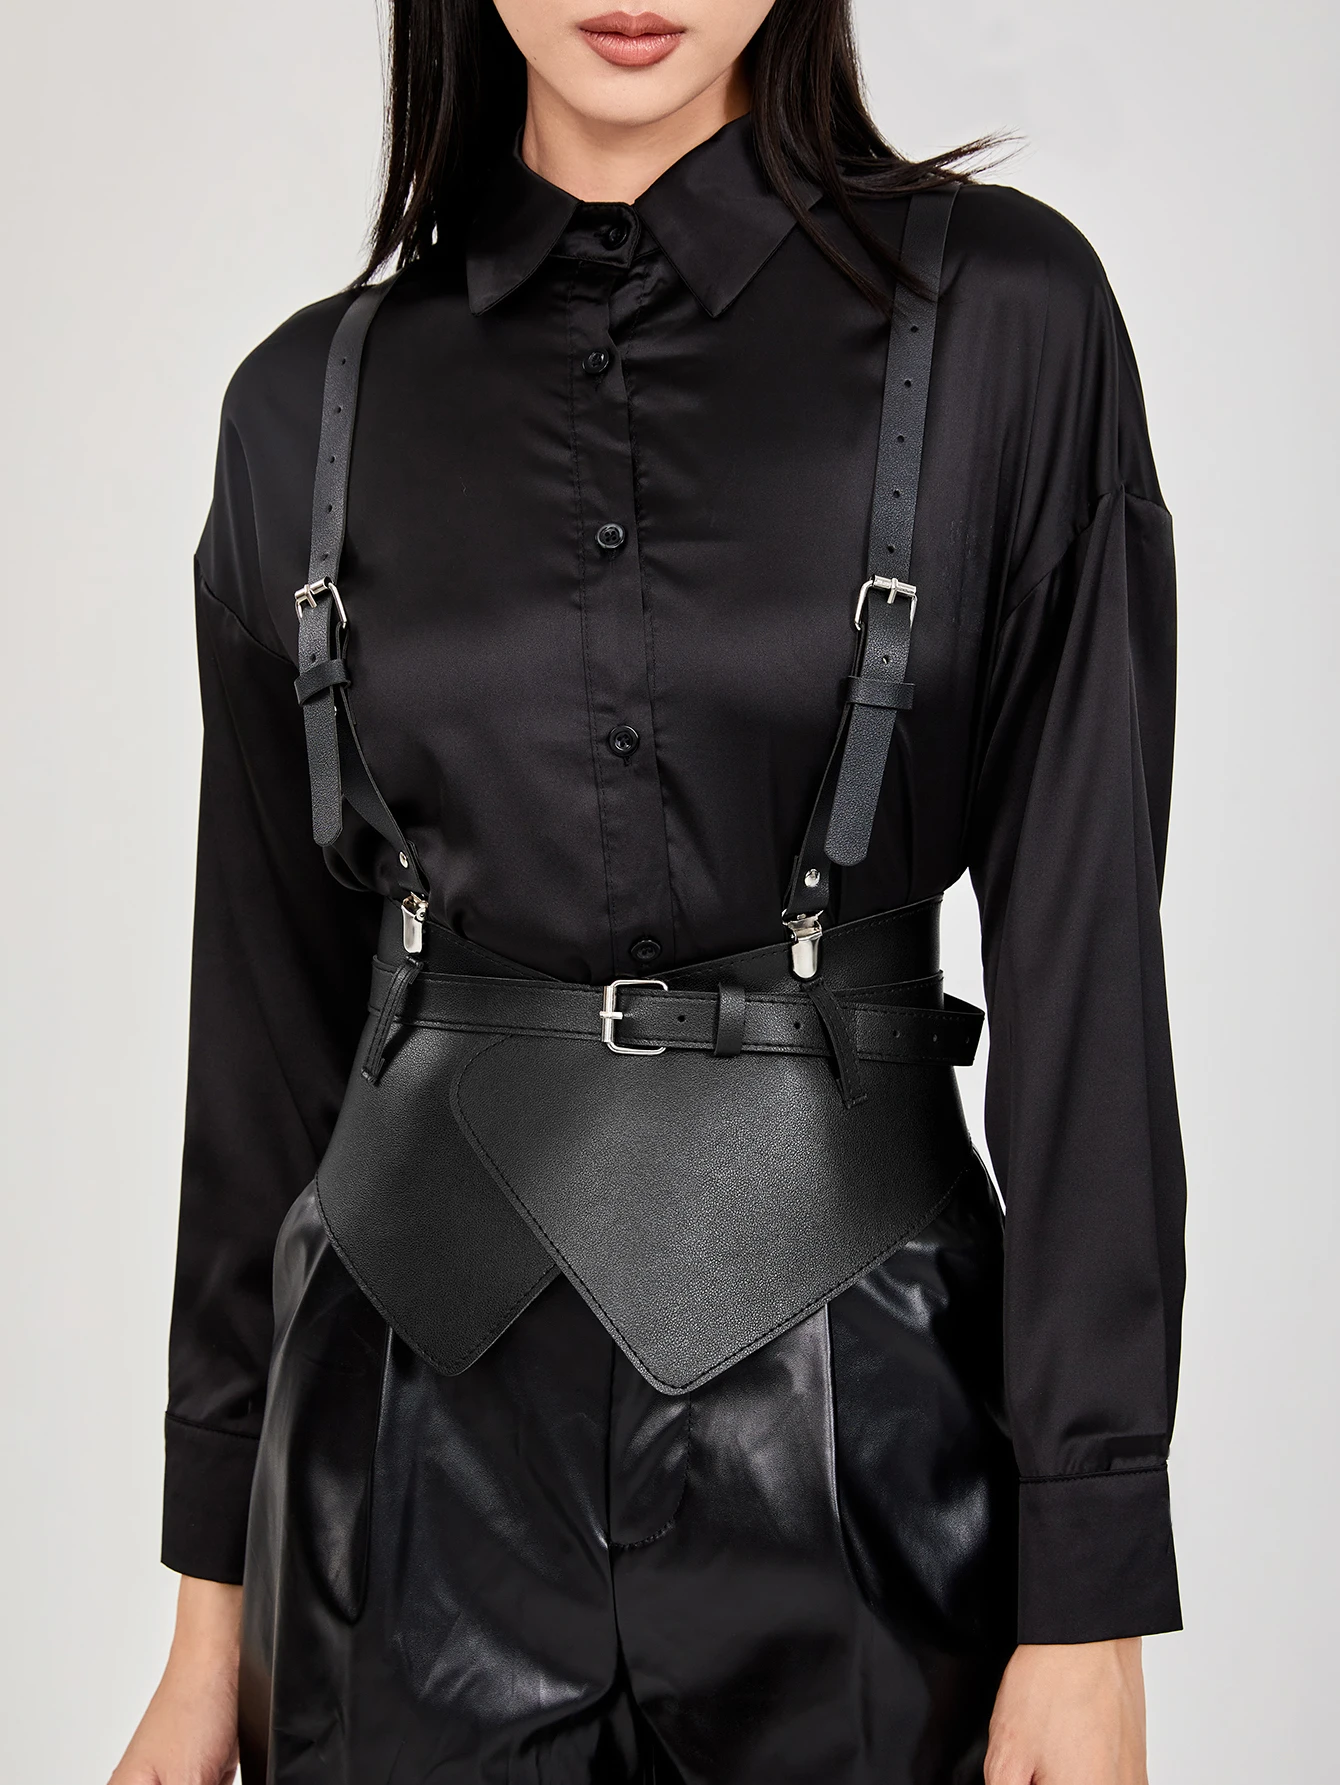 

Fashionable Women's Strap Shoulder Belts For Lady Waistband Suspender Decorative Skirt Goth Adjustable For Shirt Dress Overcoat